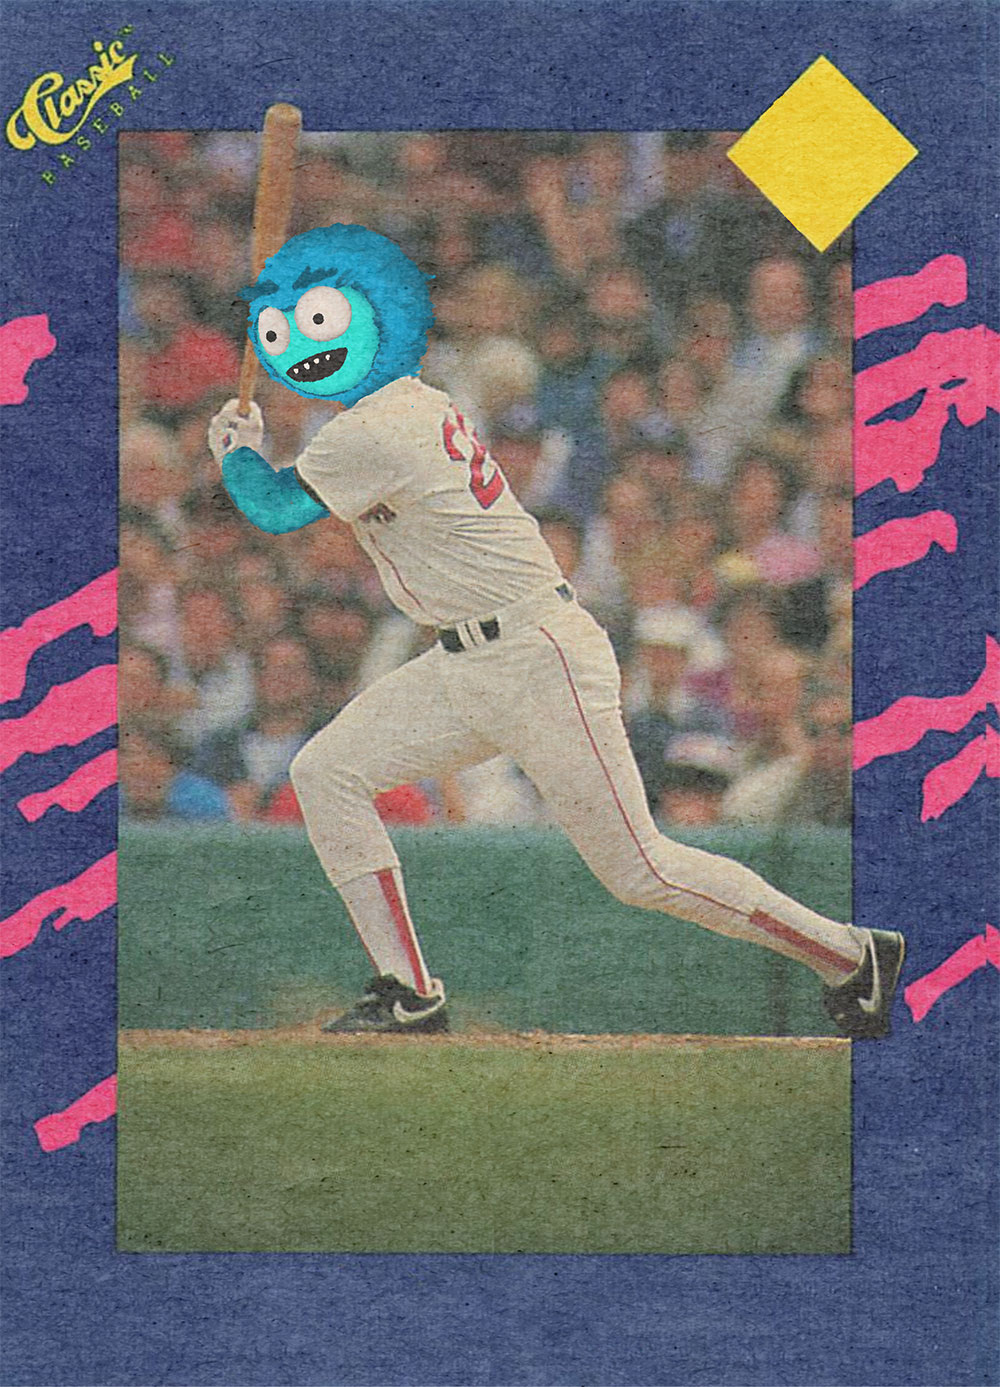 Baseball card showing a blue monster batting.